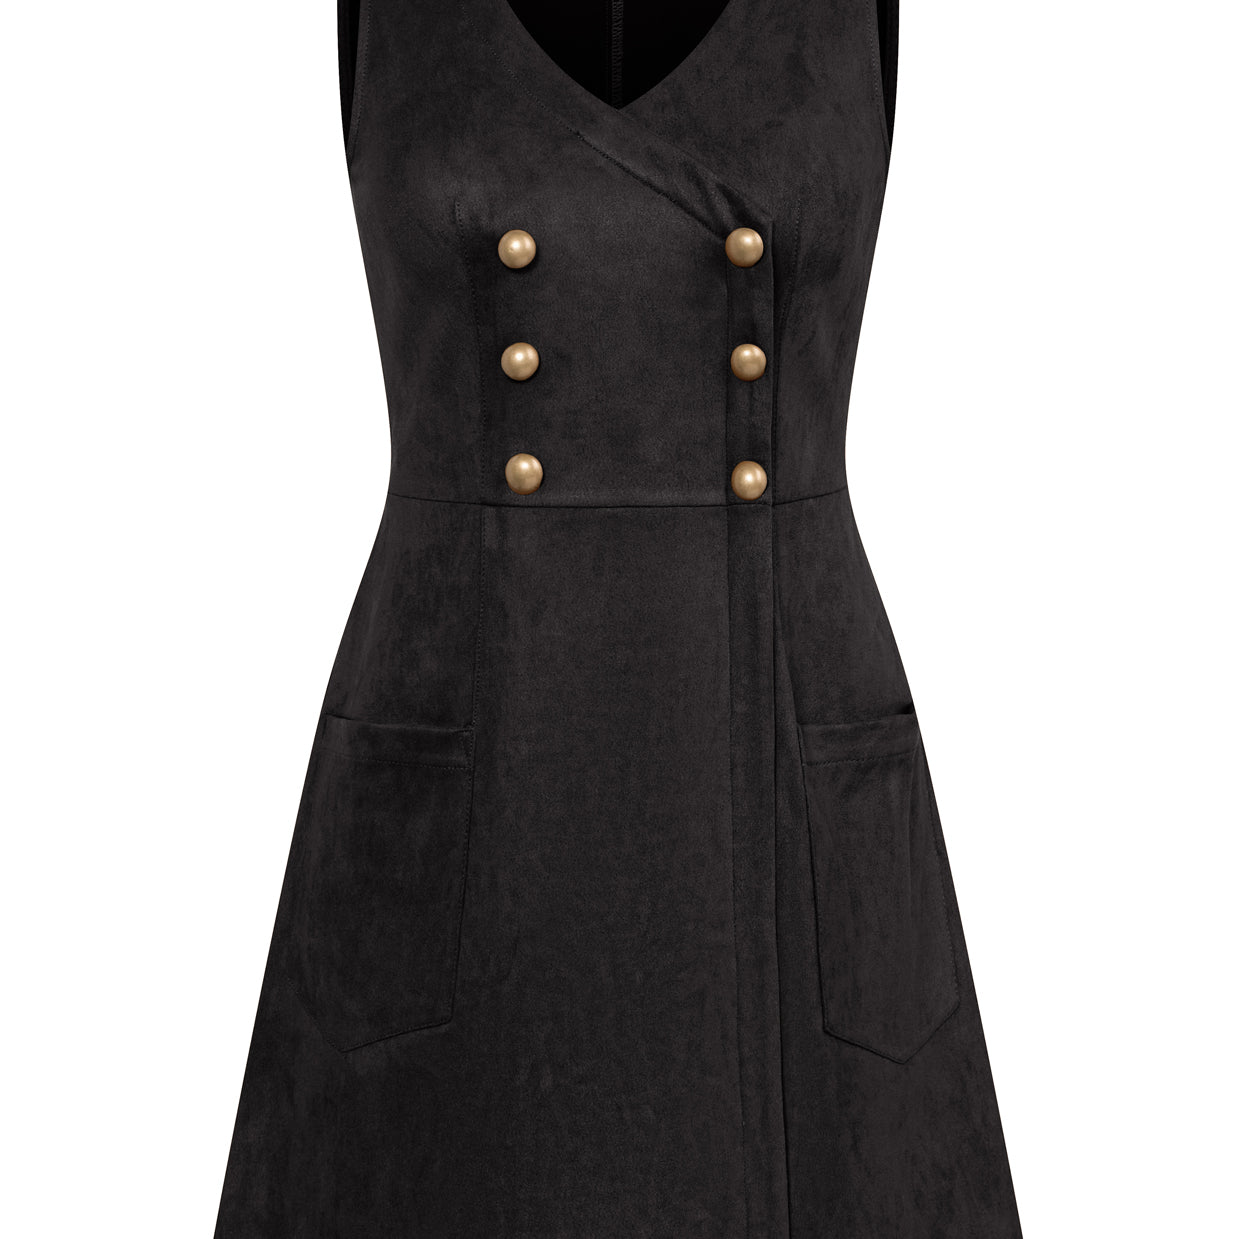 Vintage Faux Suede Dress Sleeveless V-Neck Elastic Waist A-Line Dress